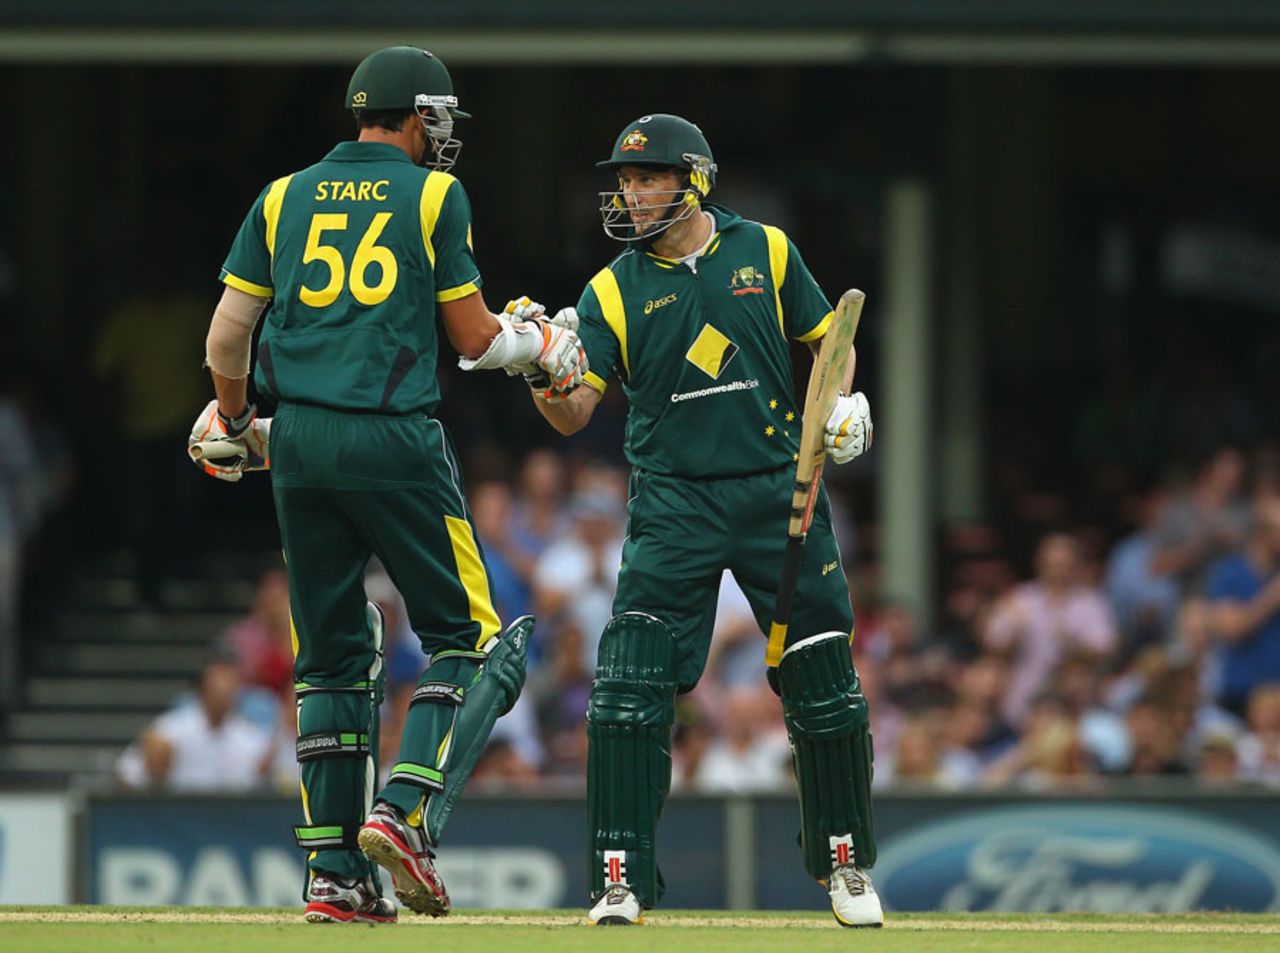 David Hussey and Mitchell Starc added 49 for the 9th wicket, Australia v Sri Lanka, CB Series, Sydney, February 17, 2012